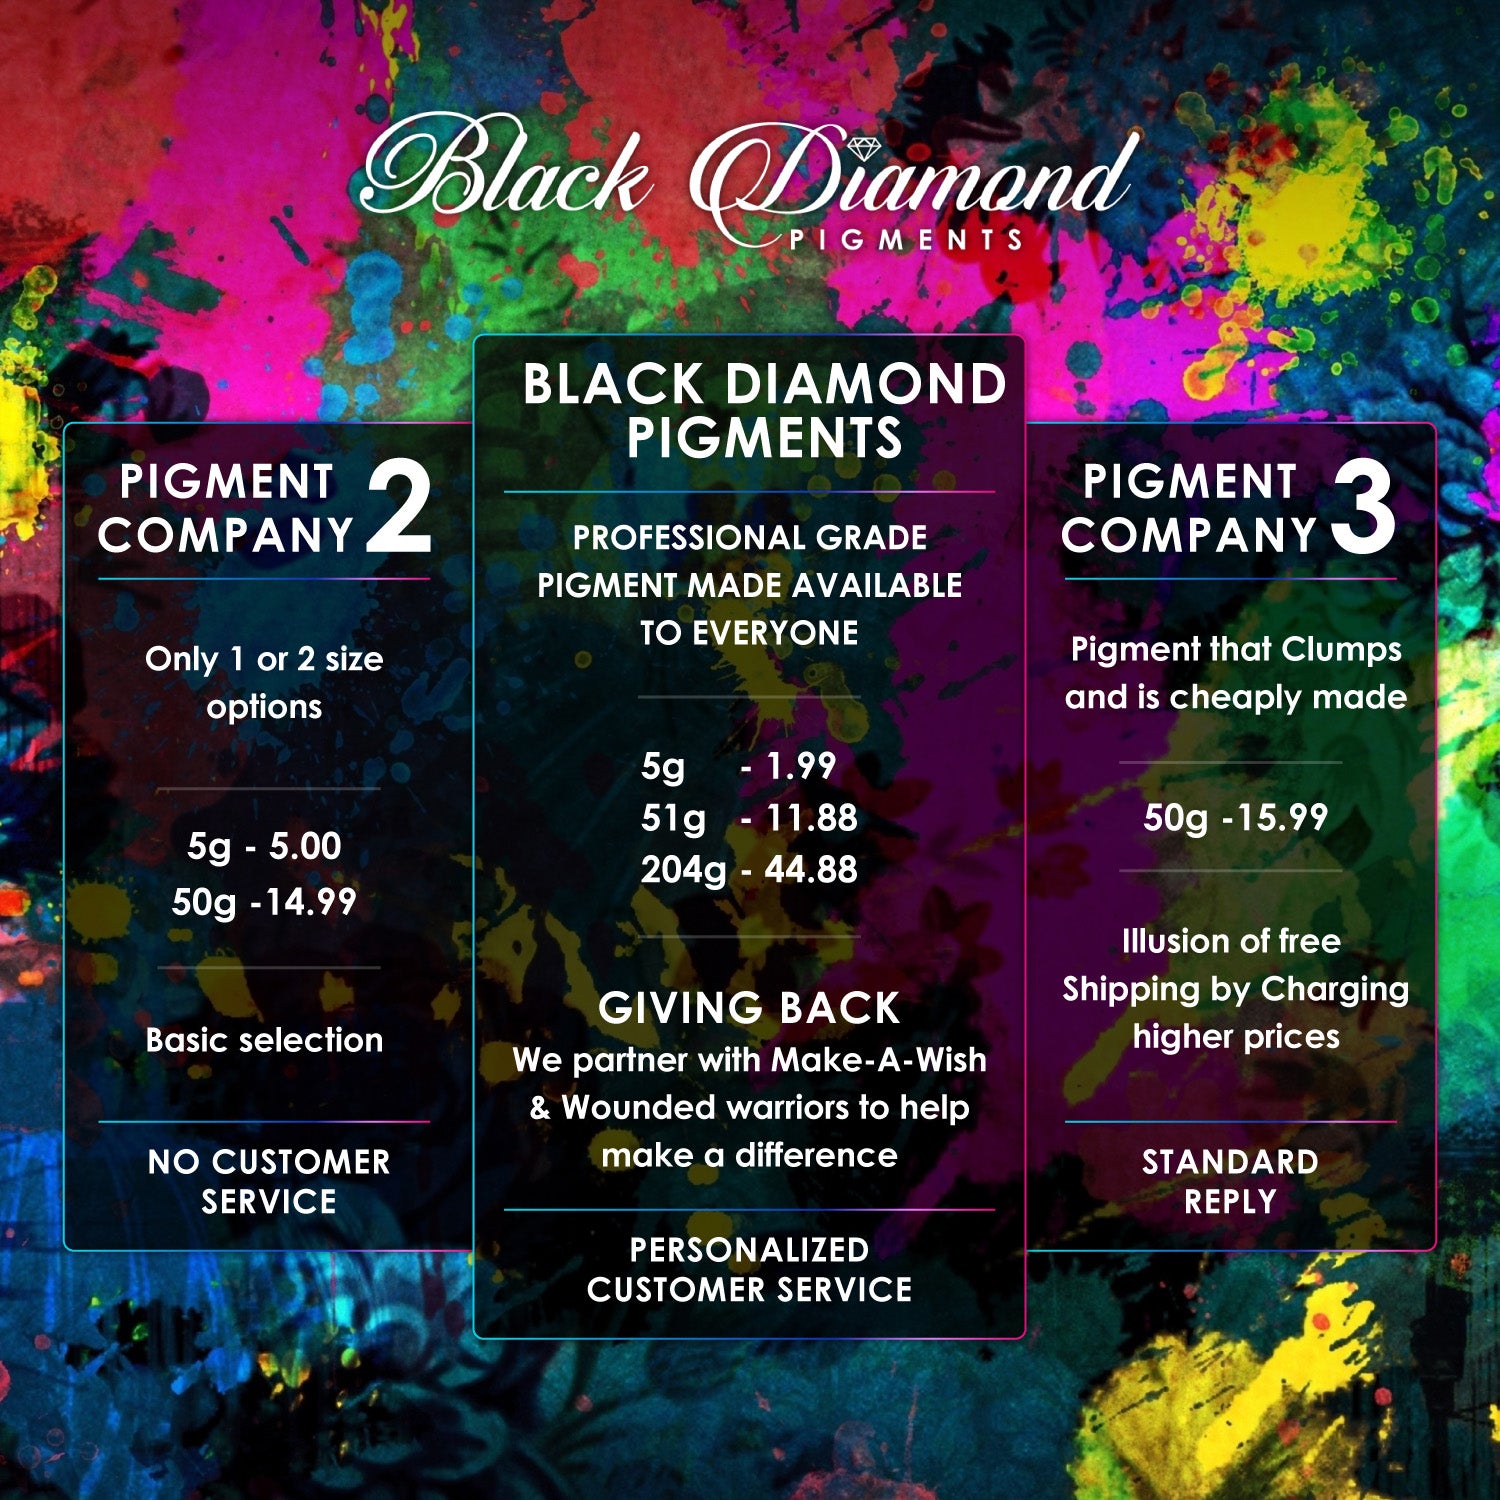 "ANDROMEDA" Black Diamond Pigments